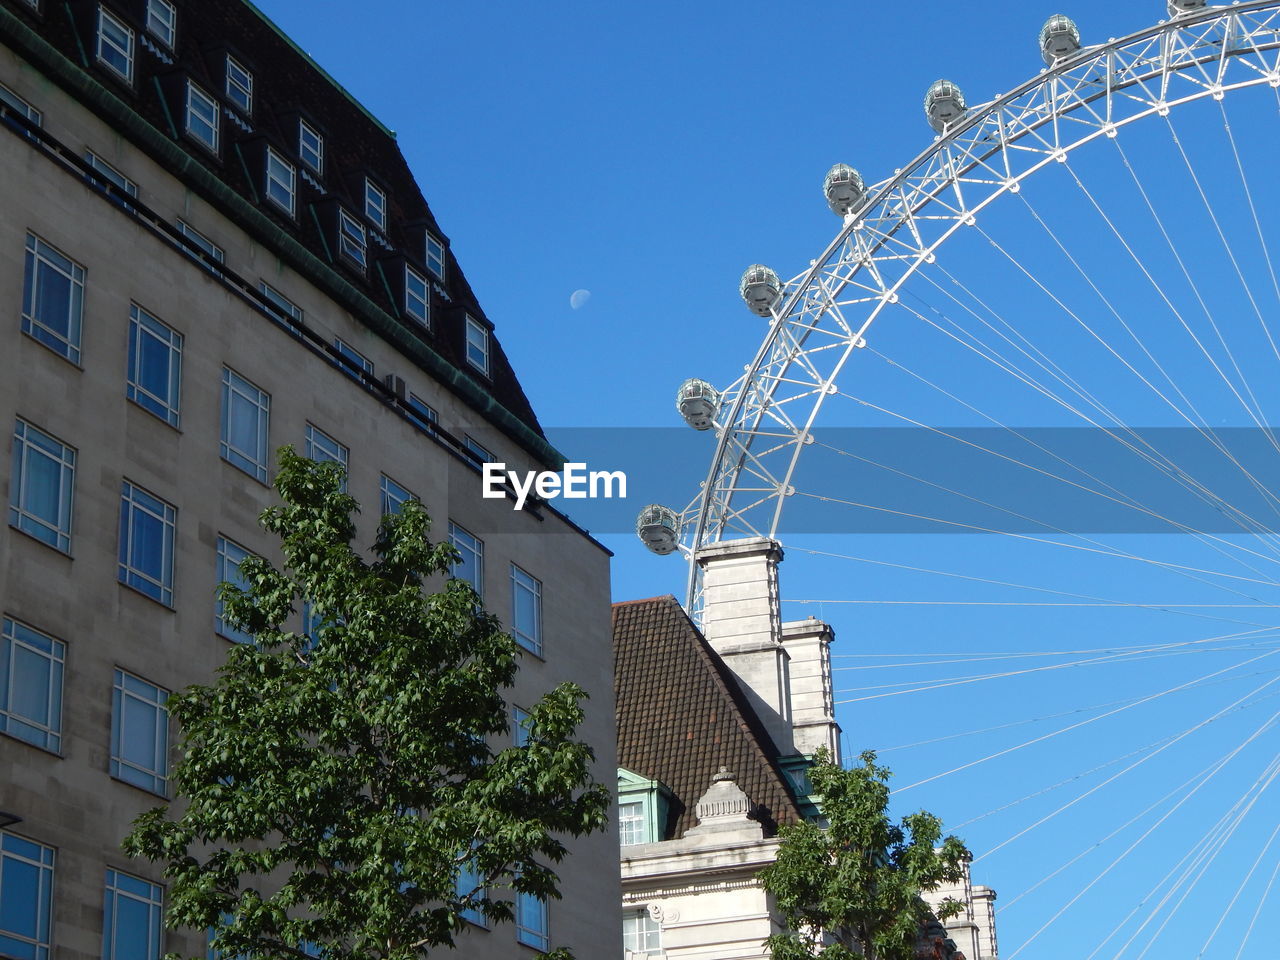 London eye